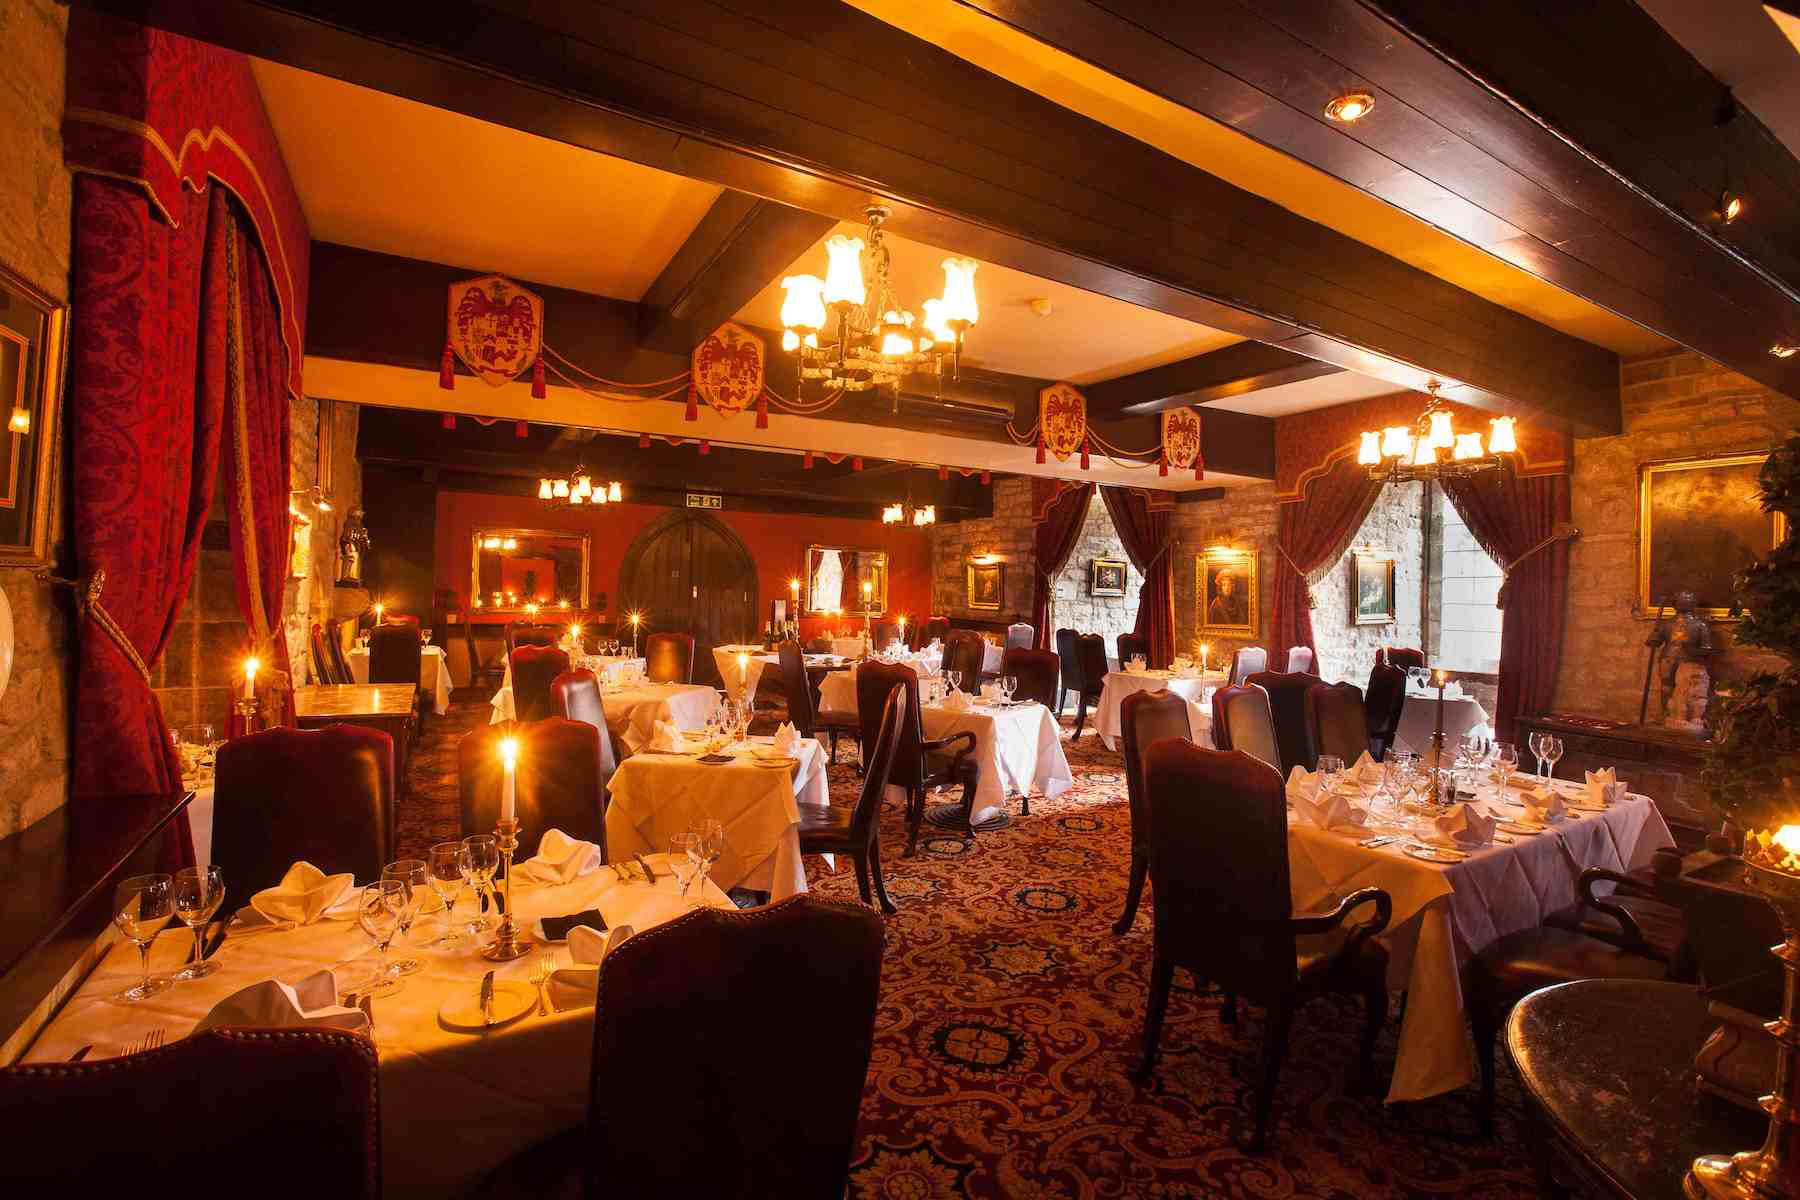 Josephine Restaurant at Langley Castle